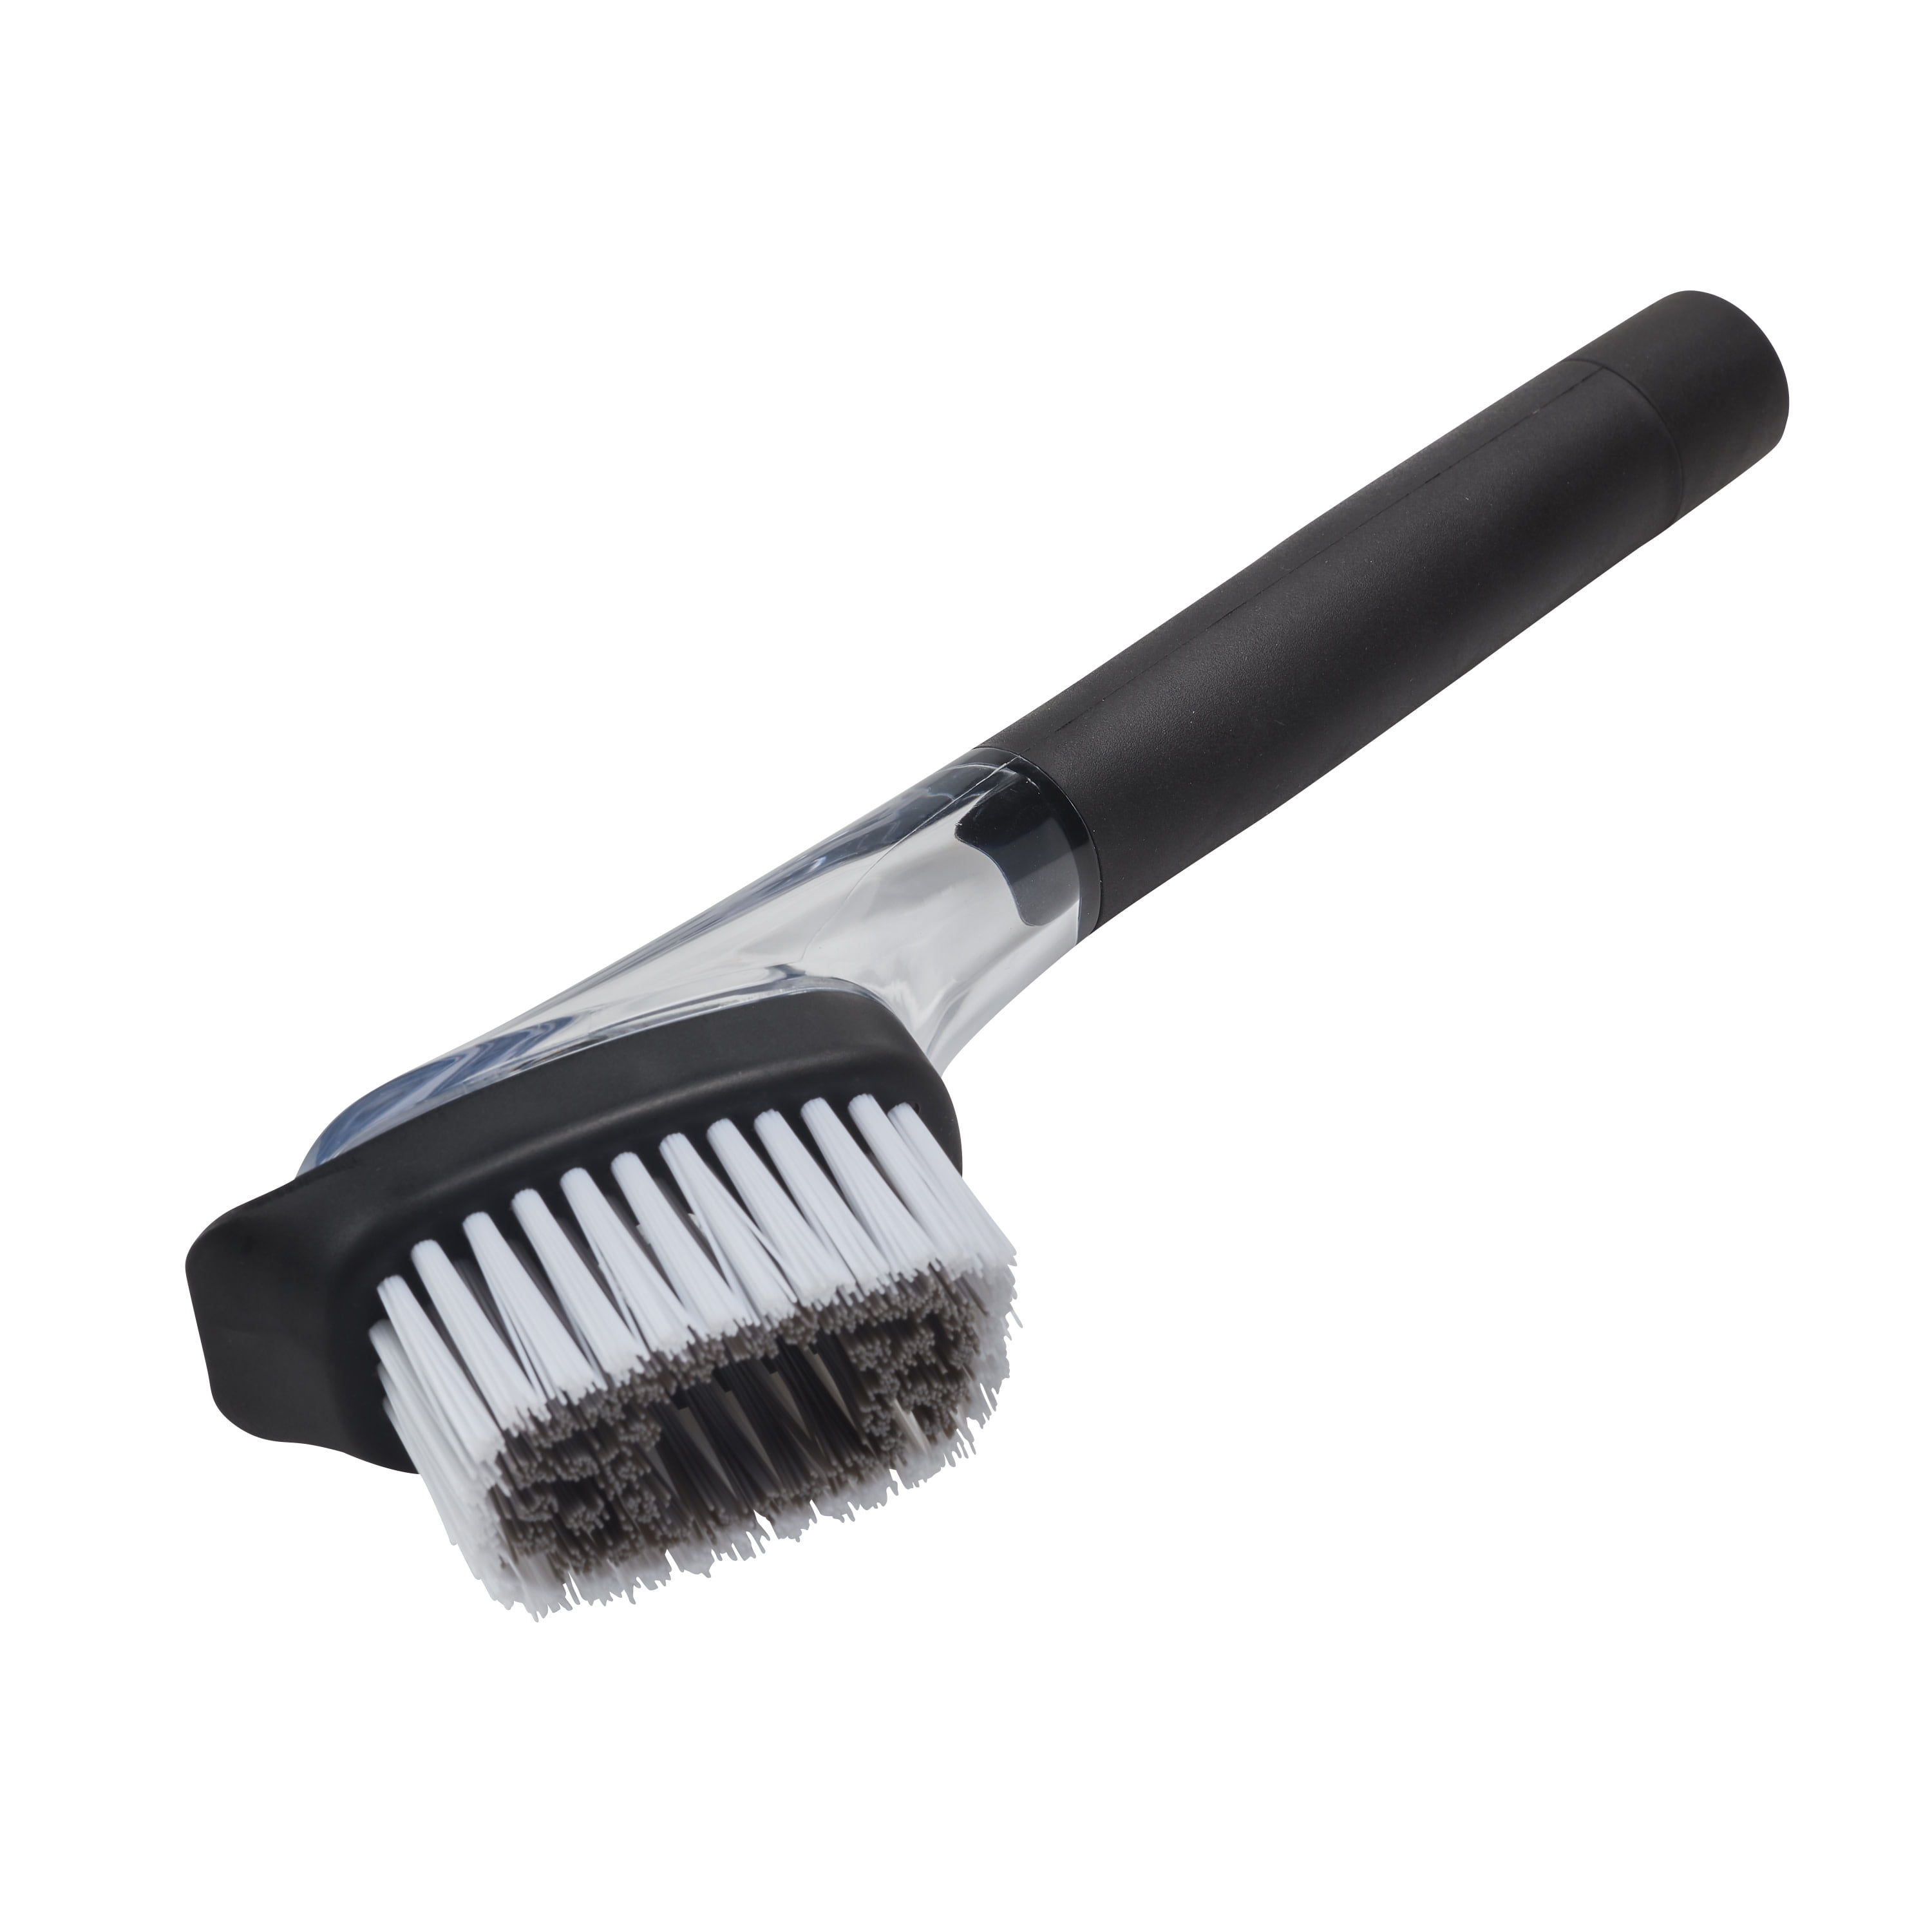 StewMac Micro Cleaning Brushes, Set of All 5 Micro Brush/Swab Packs